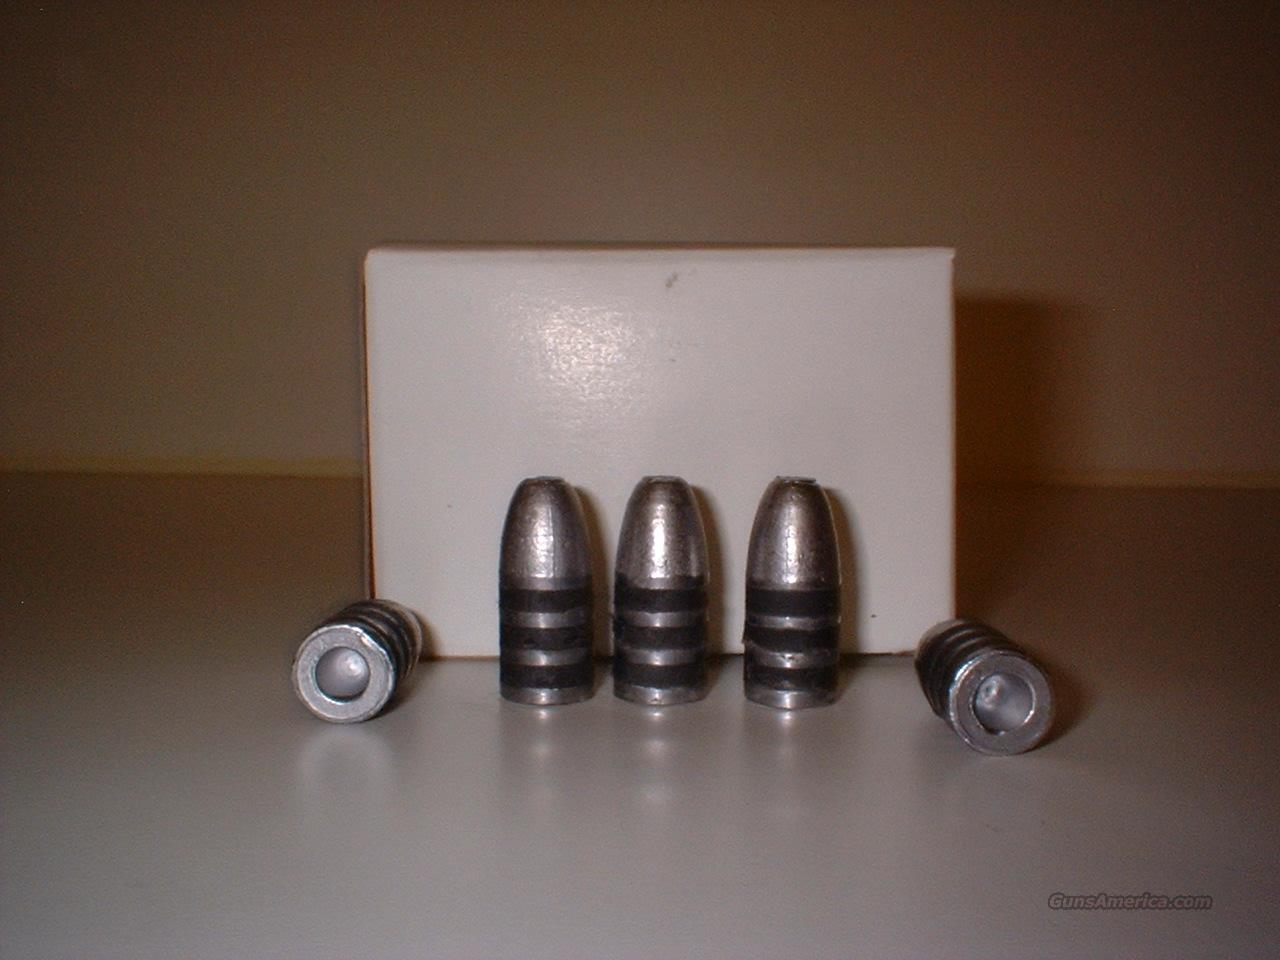 50 Cast 45 70 405 Gr Hollow Base Bullets For Sale